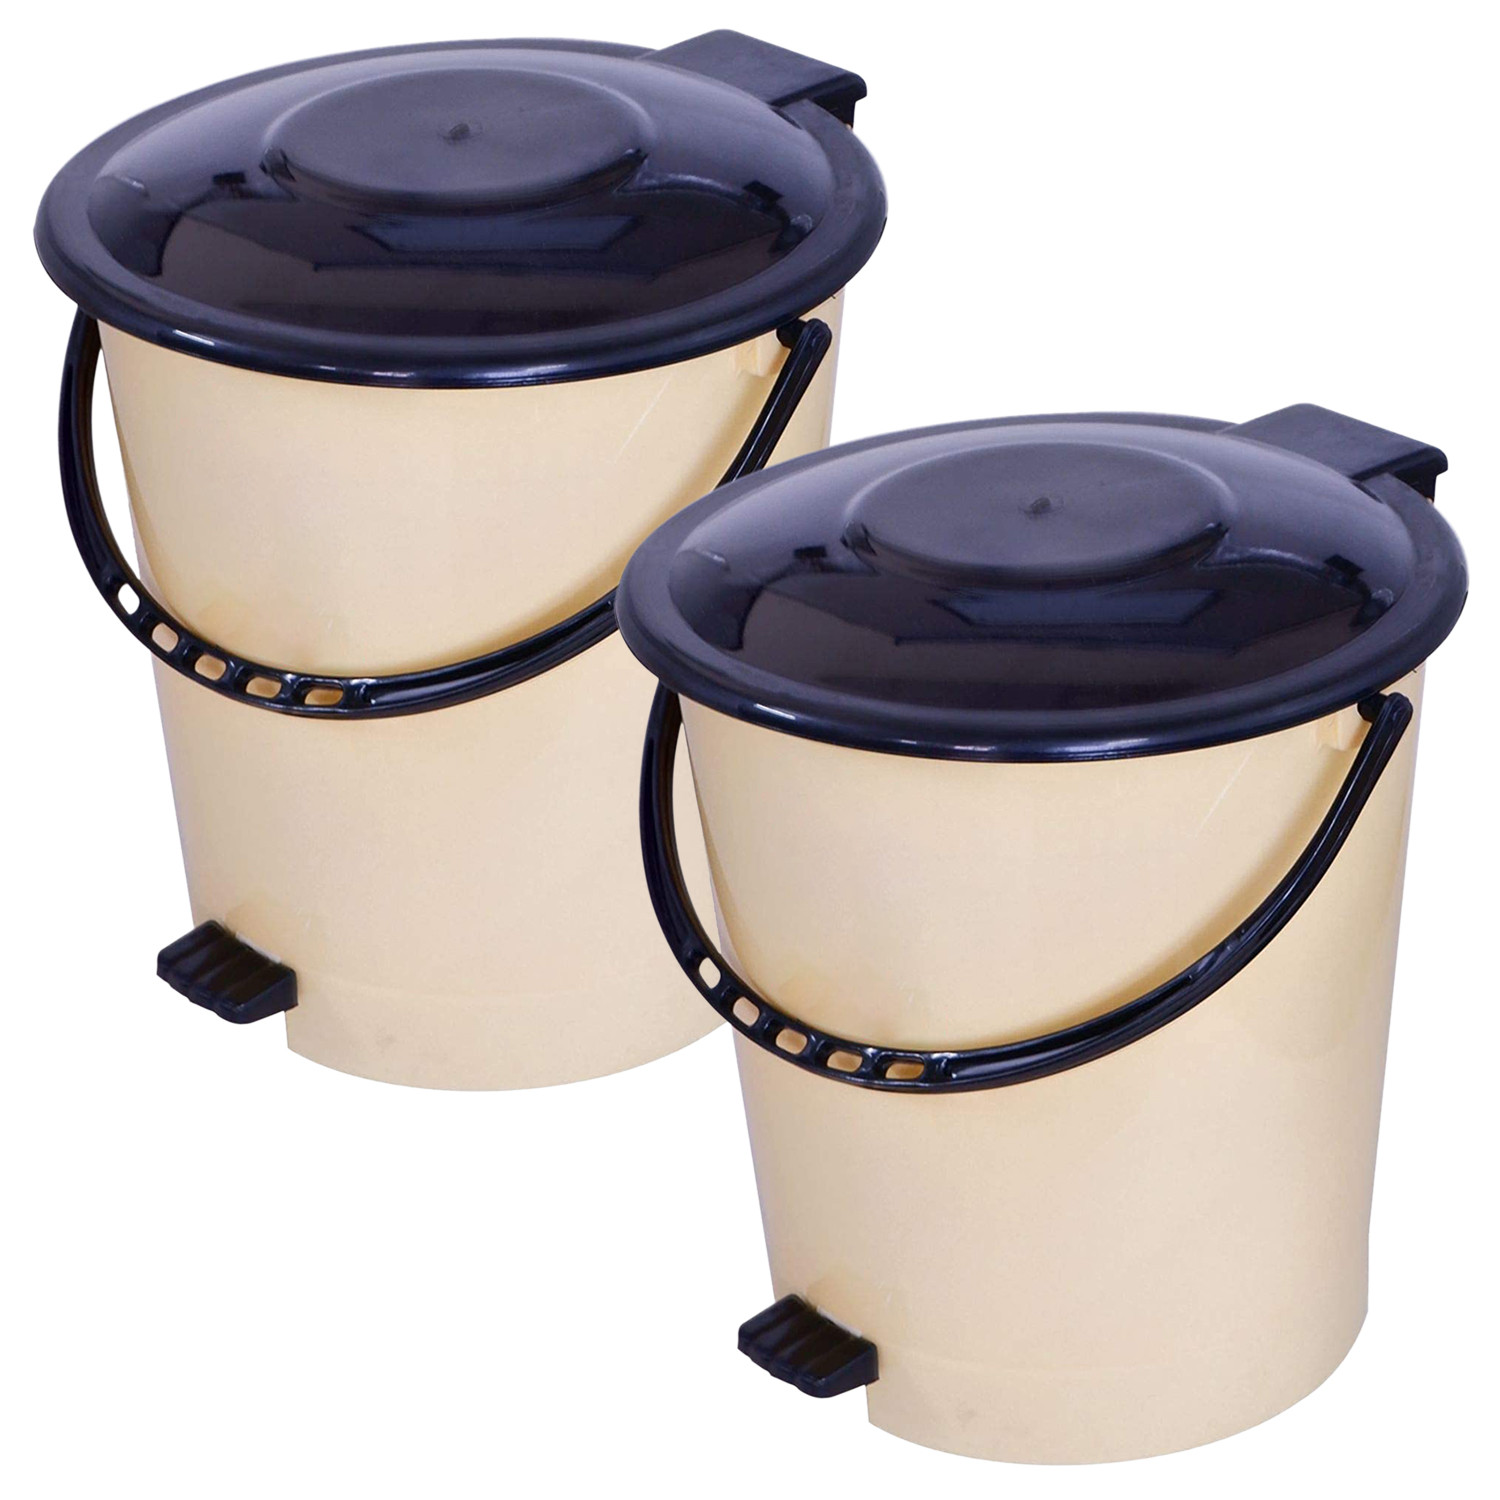 Kuber Industries Plastic Pedal Dustbin/Wastebin With Handle, 10 Liter (Cream & Brown)-47KM0993